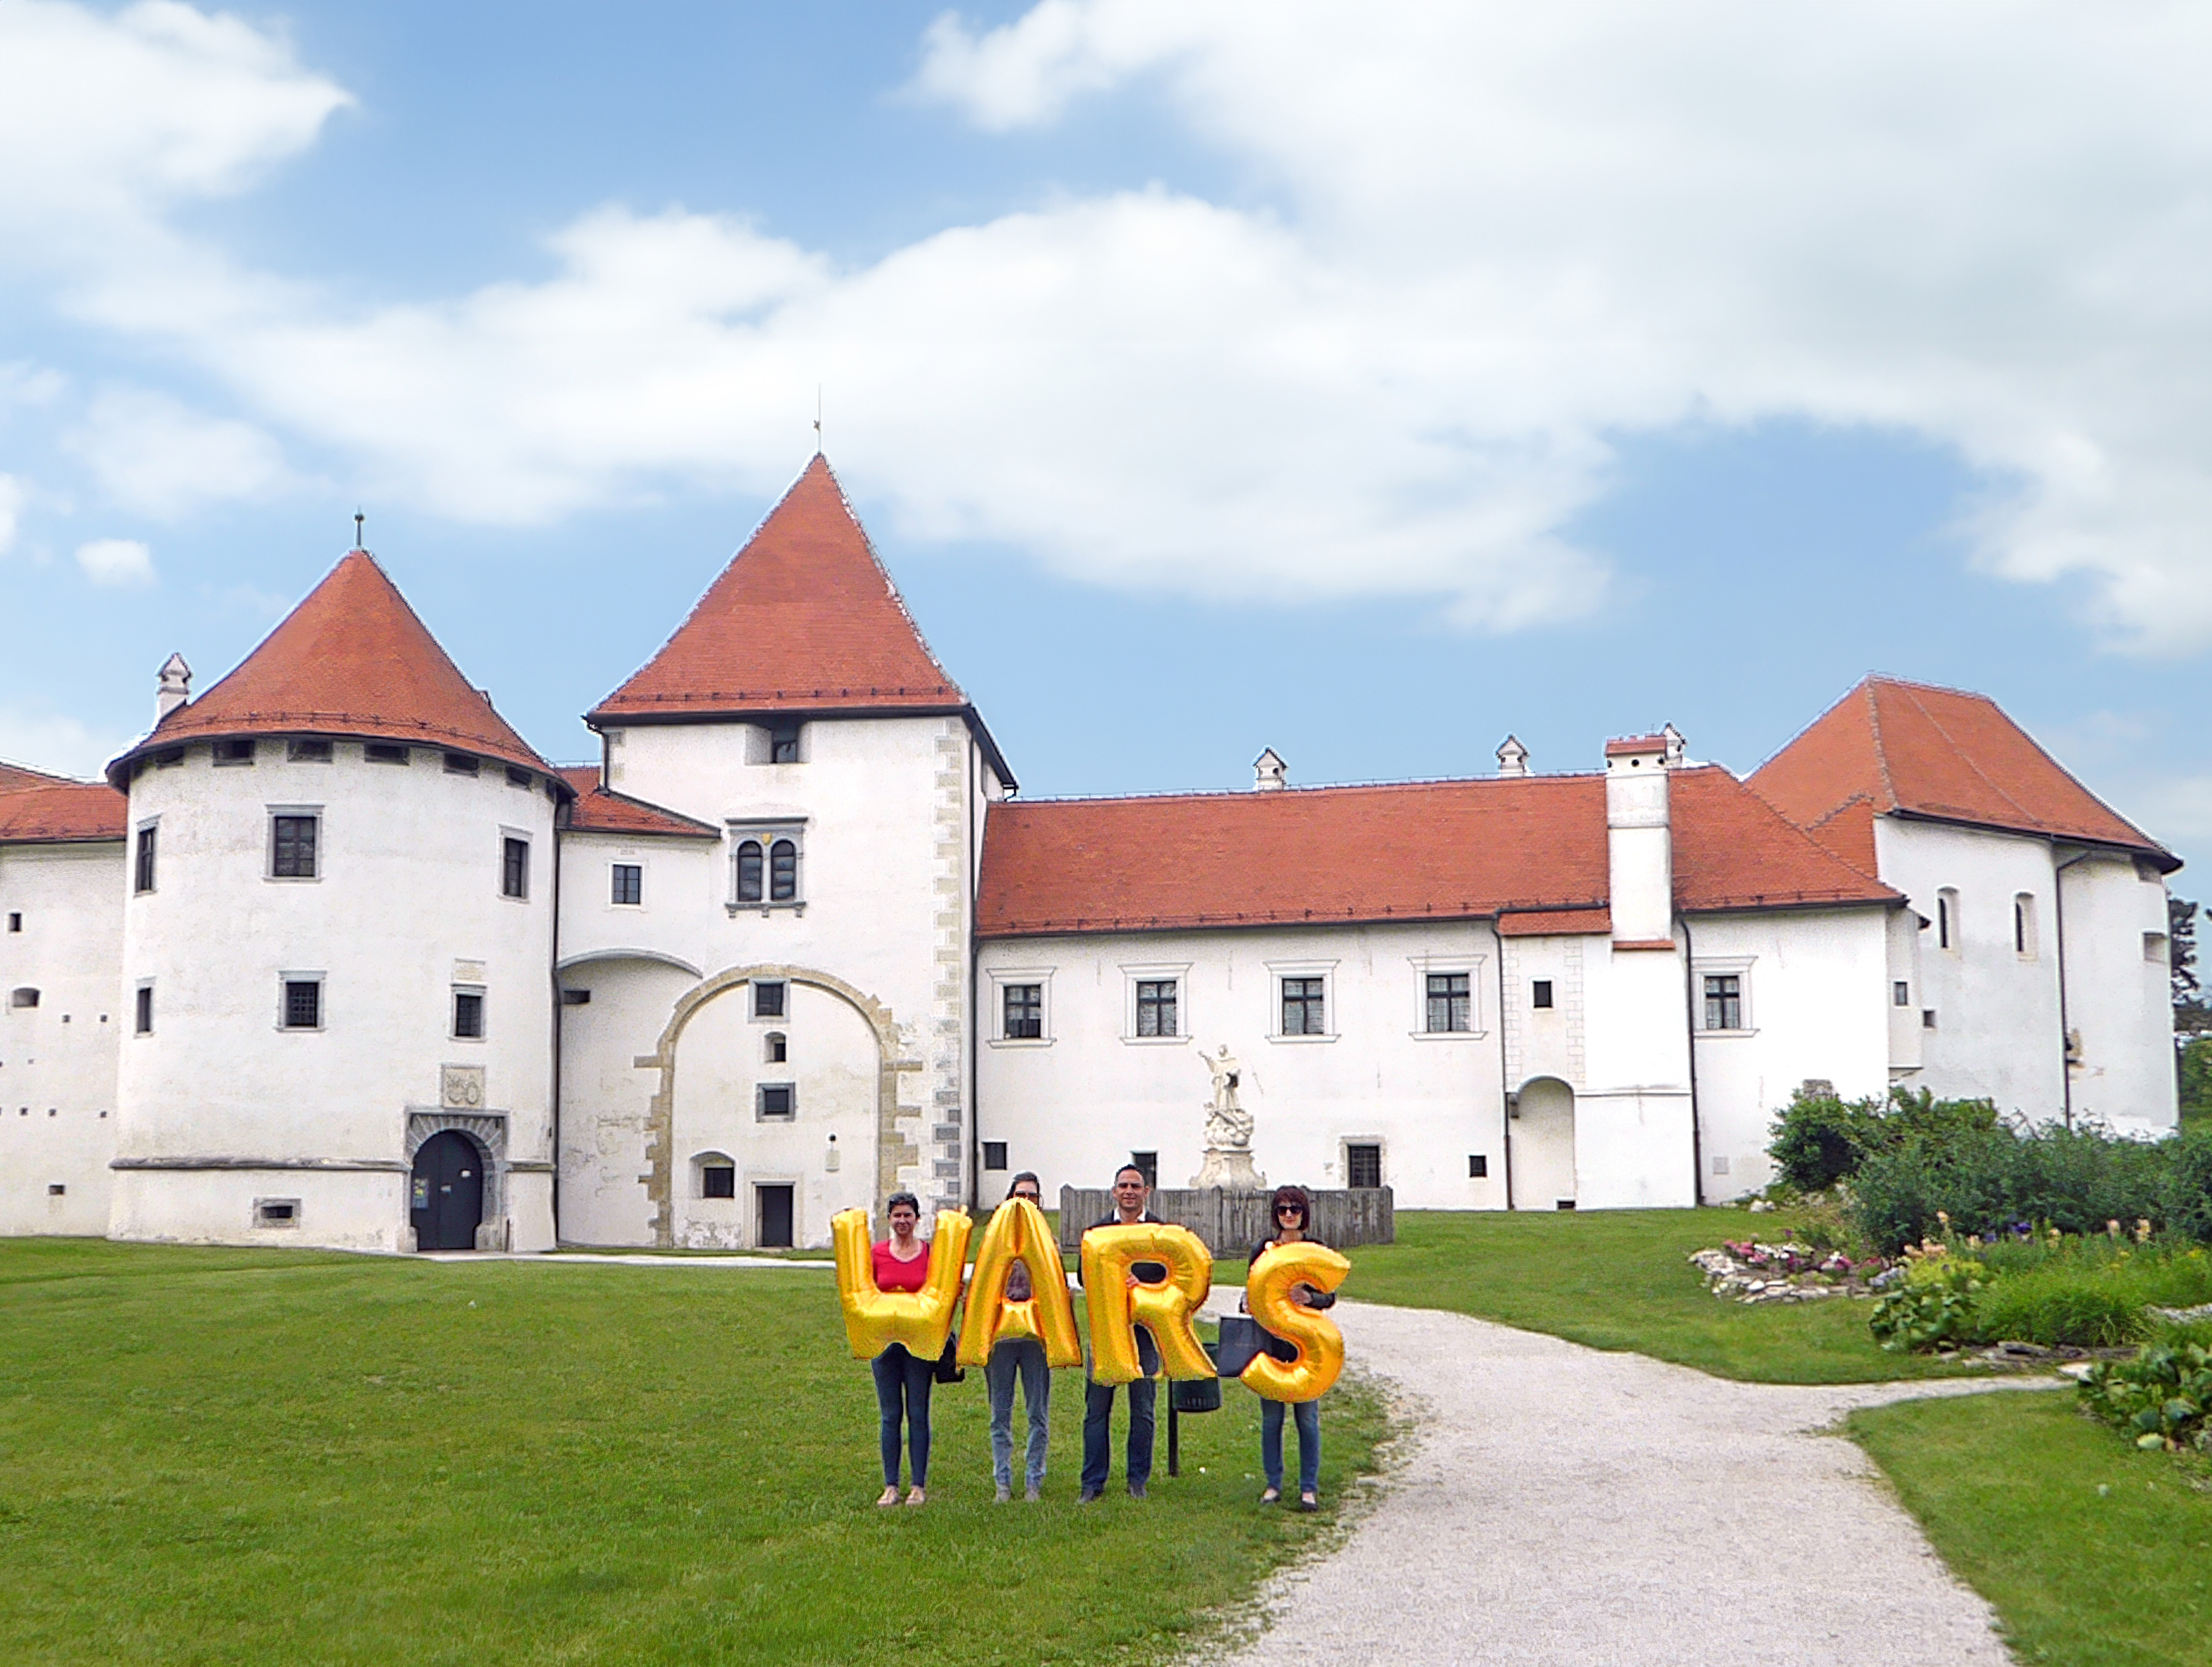 Croatia, Varazdin, Castle of Varaždin (Stari Grad) - Wars, Silence was Golden, gold balloons.jpeg